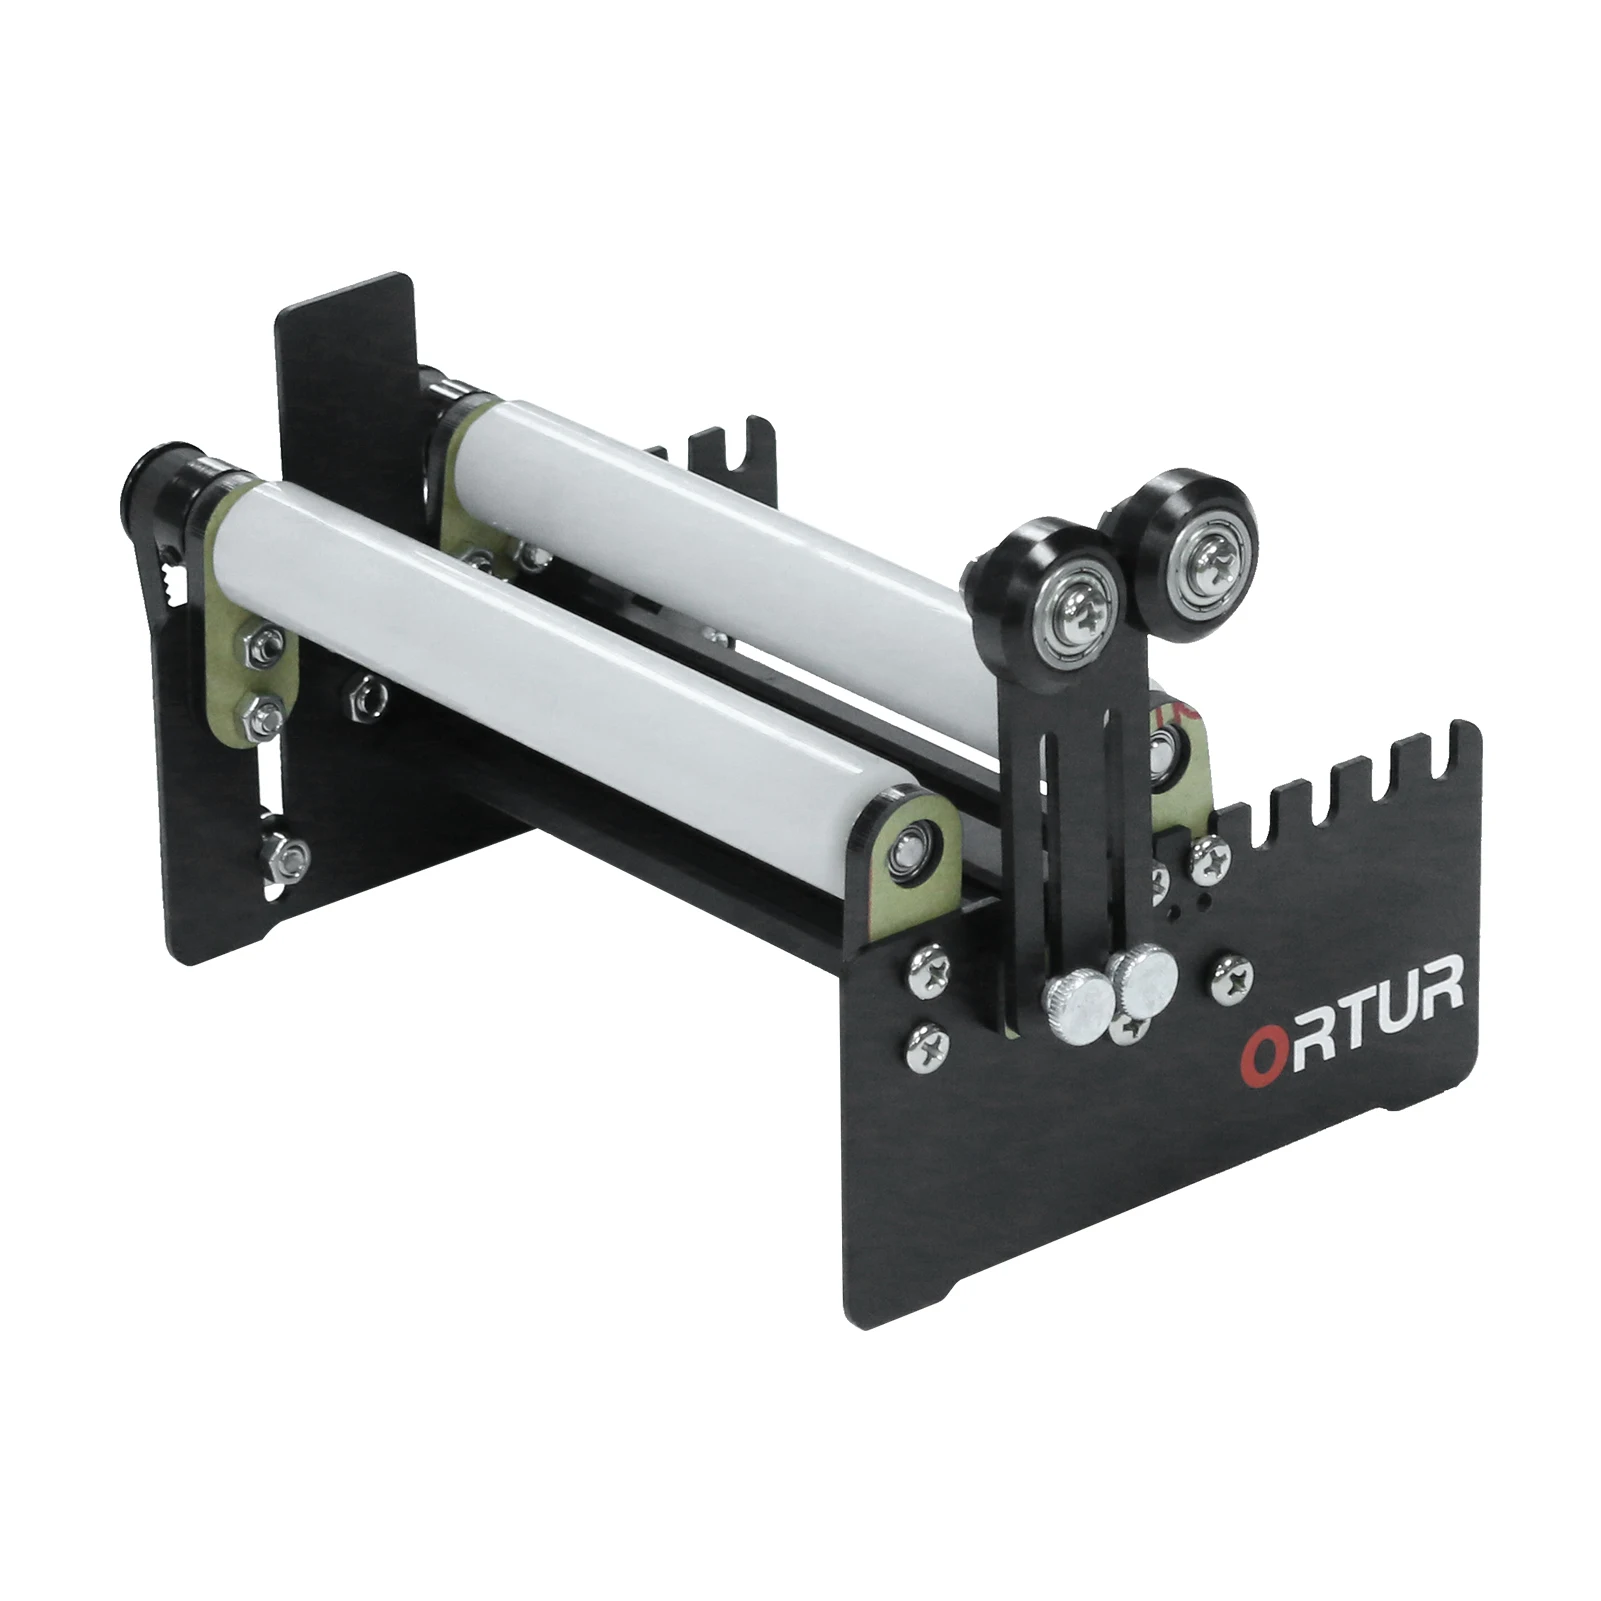 Ortur Laser Master 2 Rotary | Laser Engraving Machine Roller - 3d 